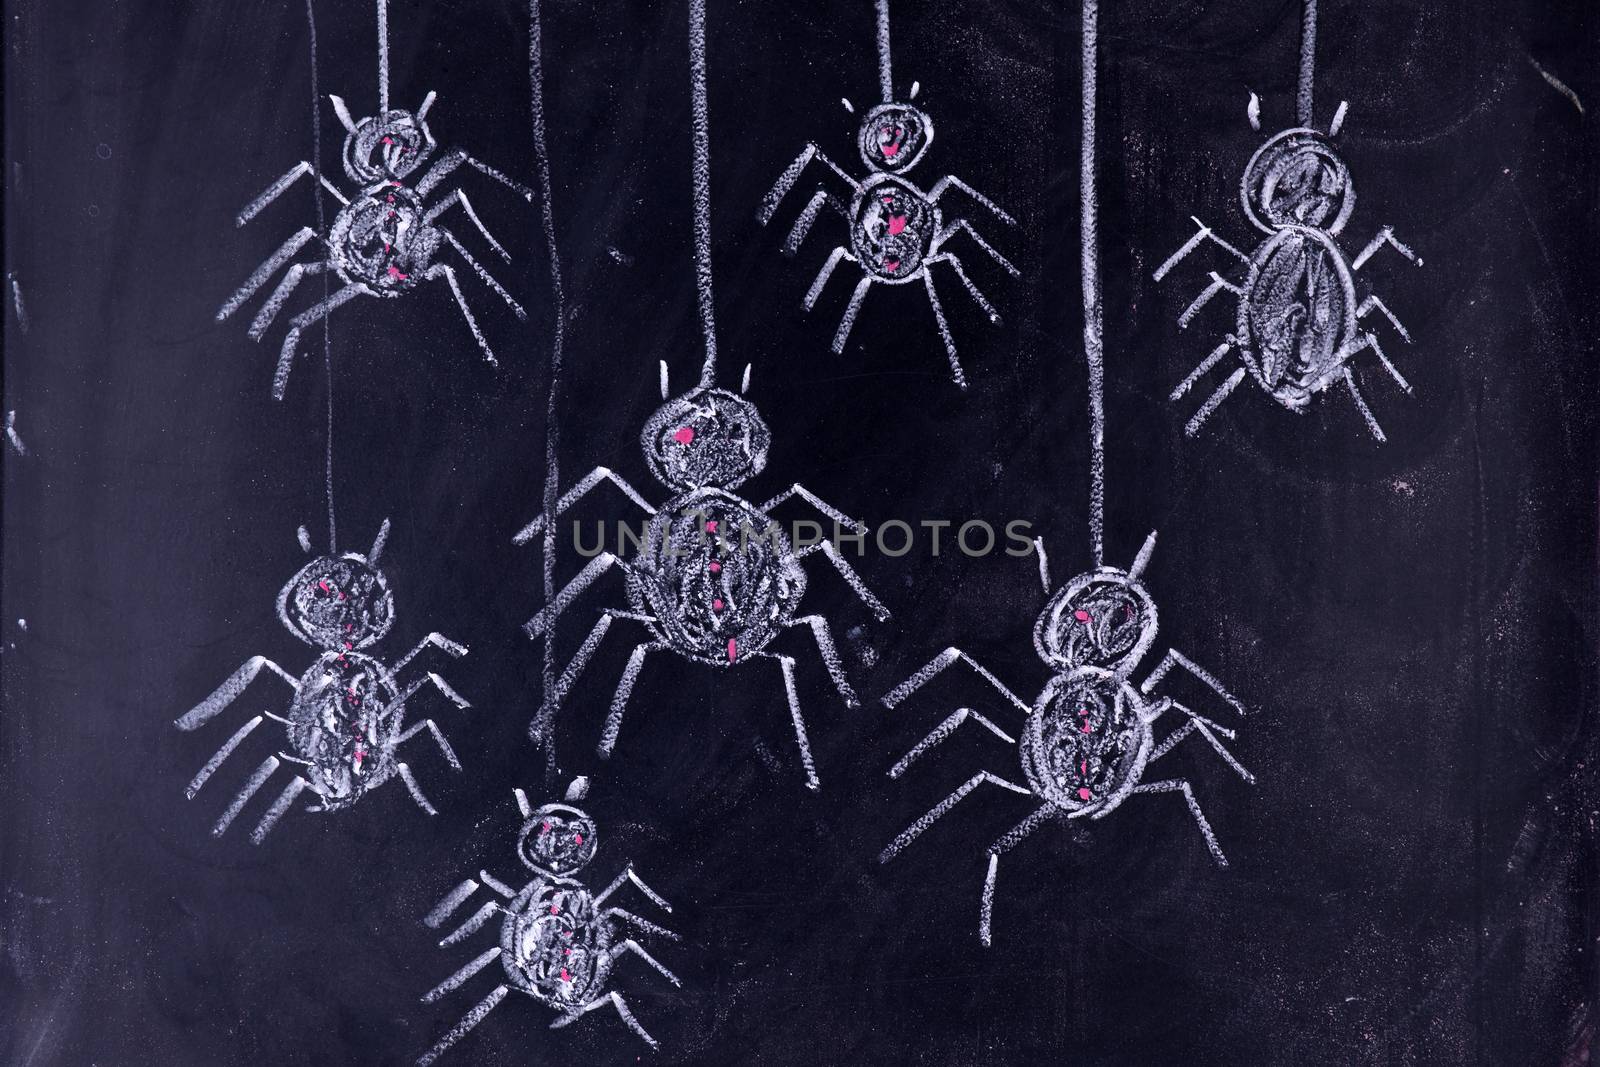 Arachnophobia: Fear of Spiders by fotografiche.eu